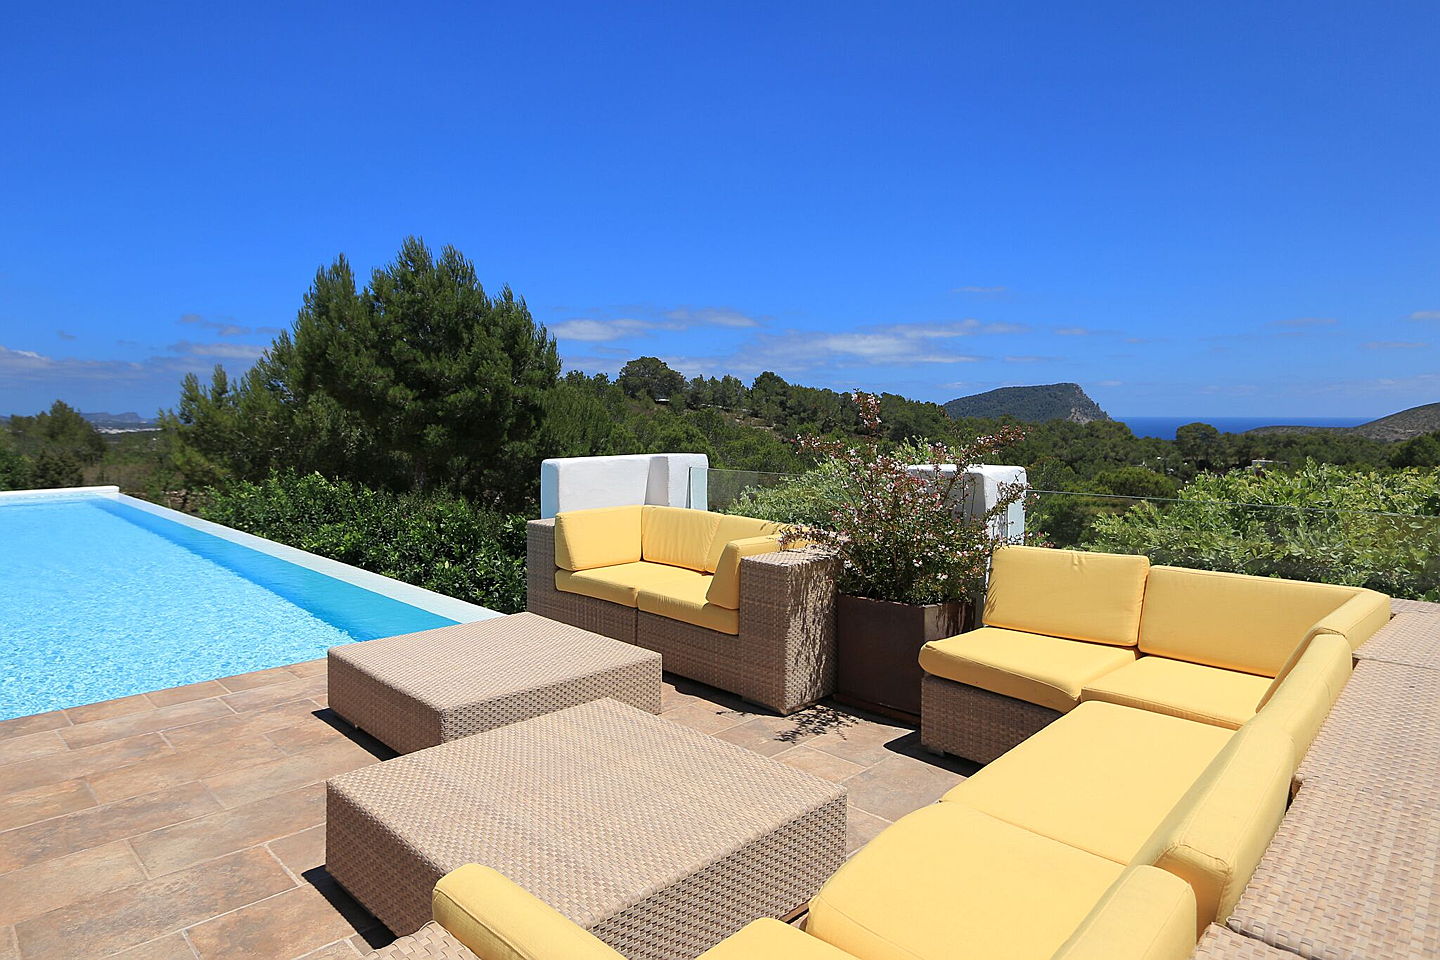  Ibiza
- Casa de ensueño con piscina al aire libre (Santa Eulalia)